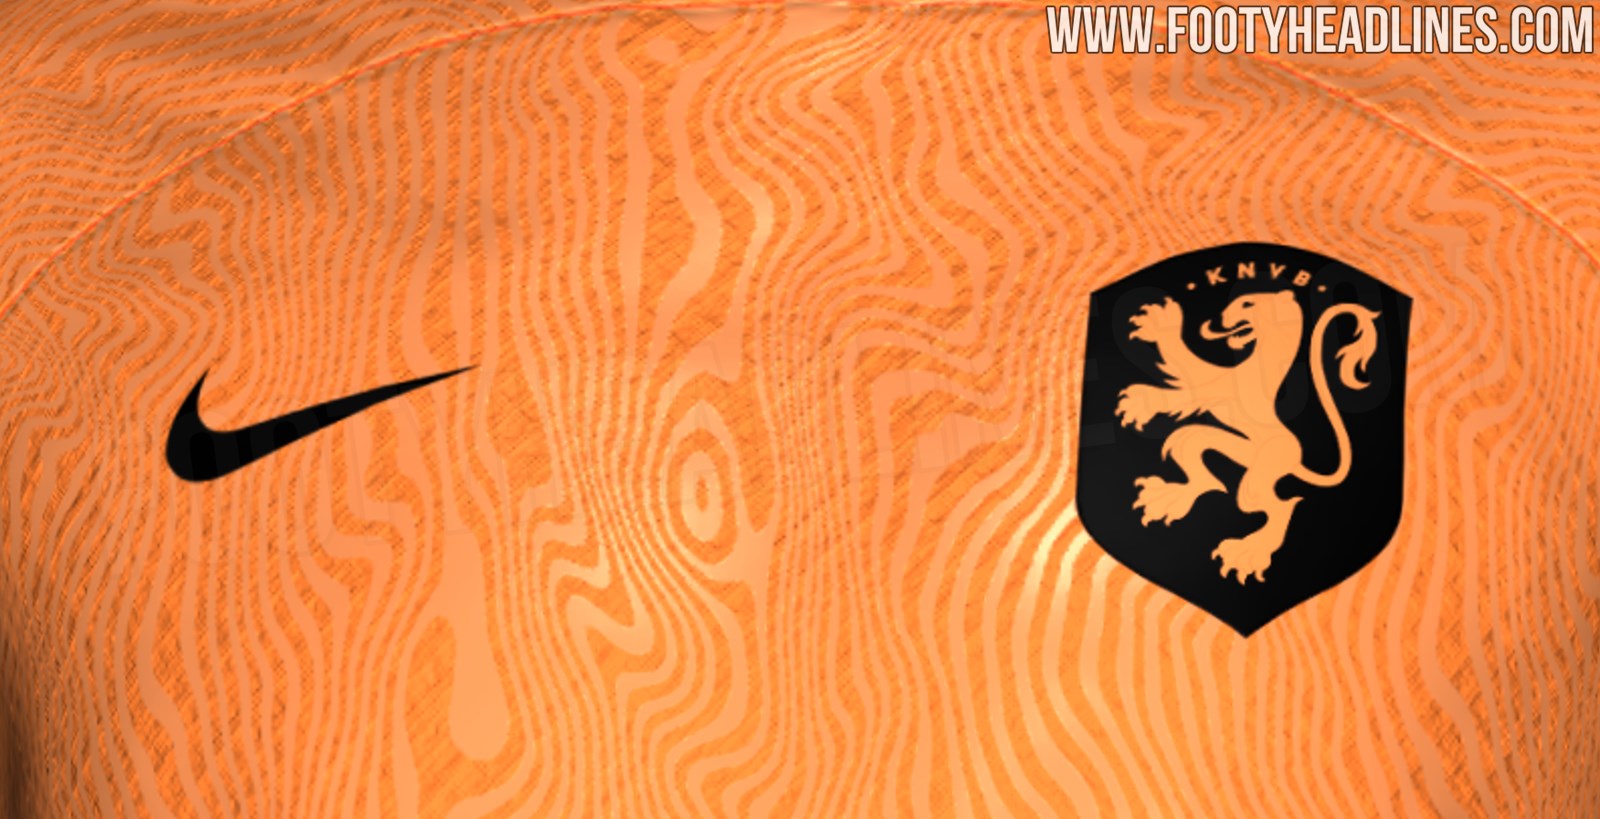 Why does the Netherlands wear orange? Explaining the Dutch jerseys